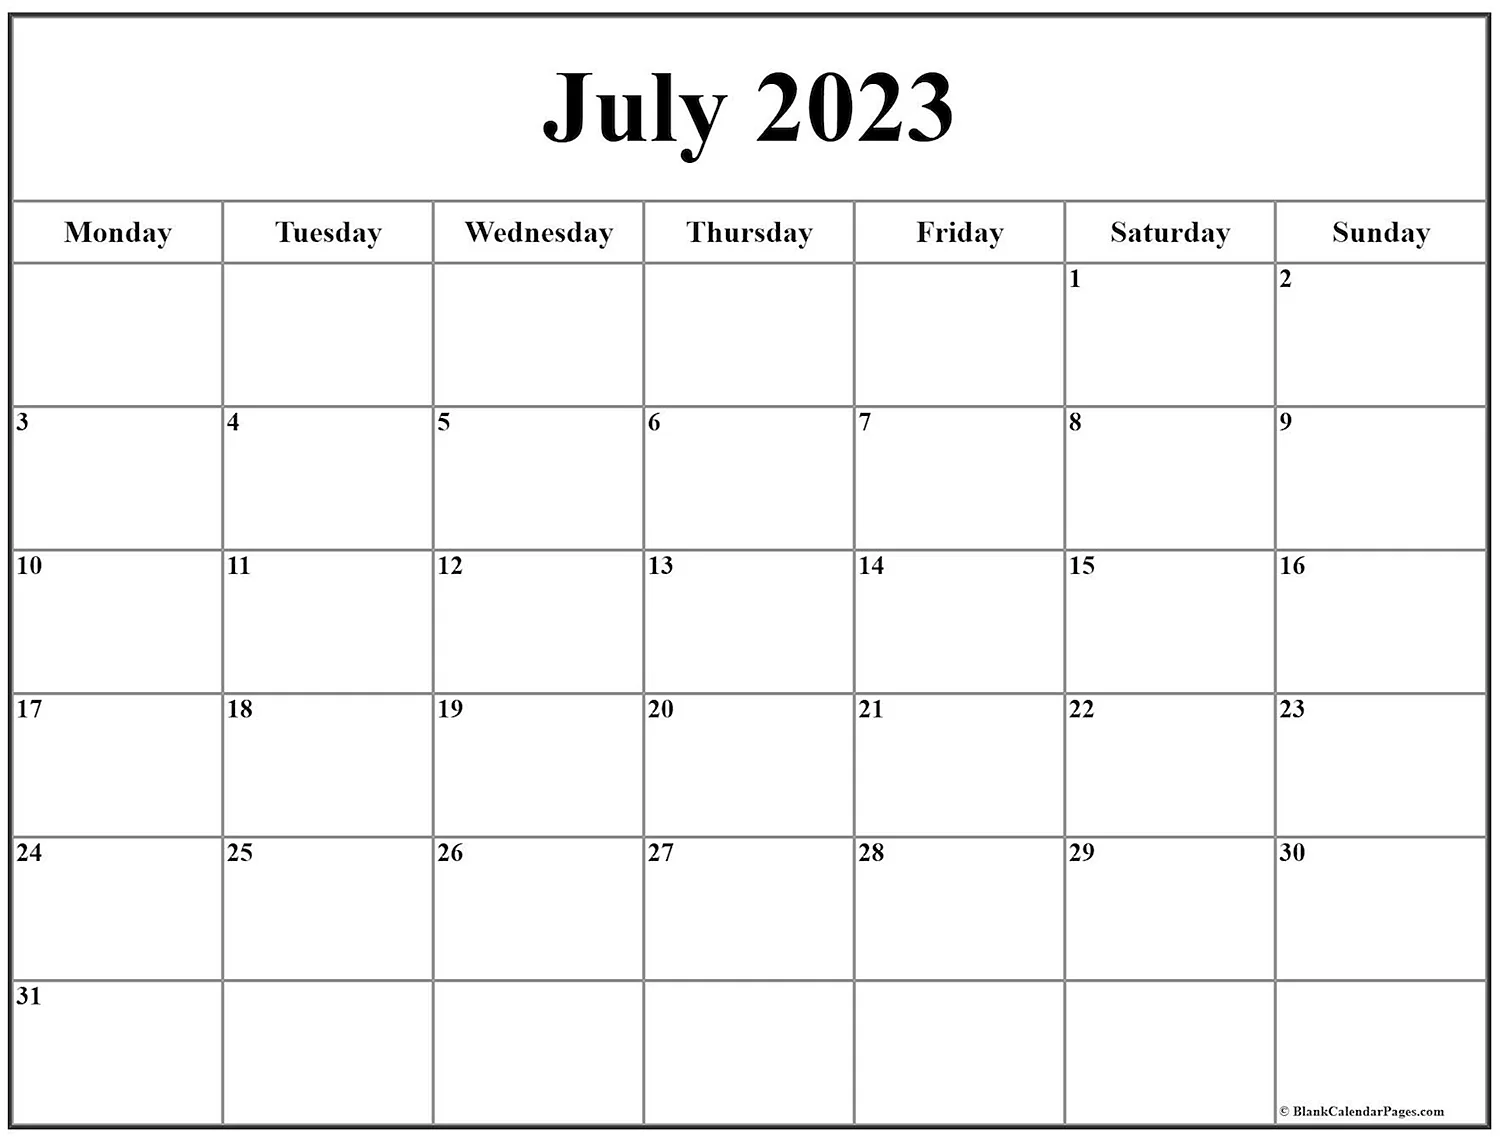 Сентябрь 2023 года календарь